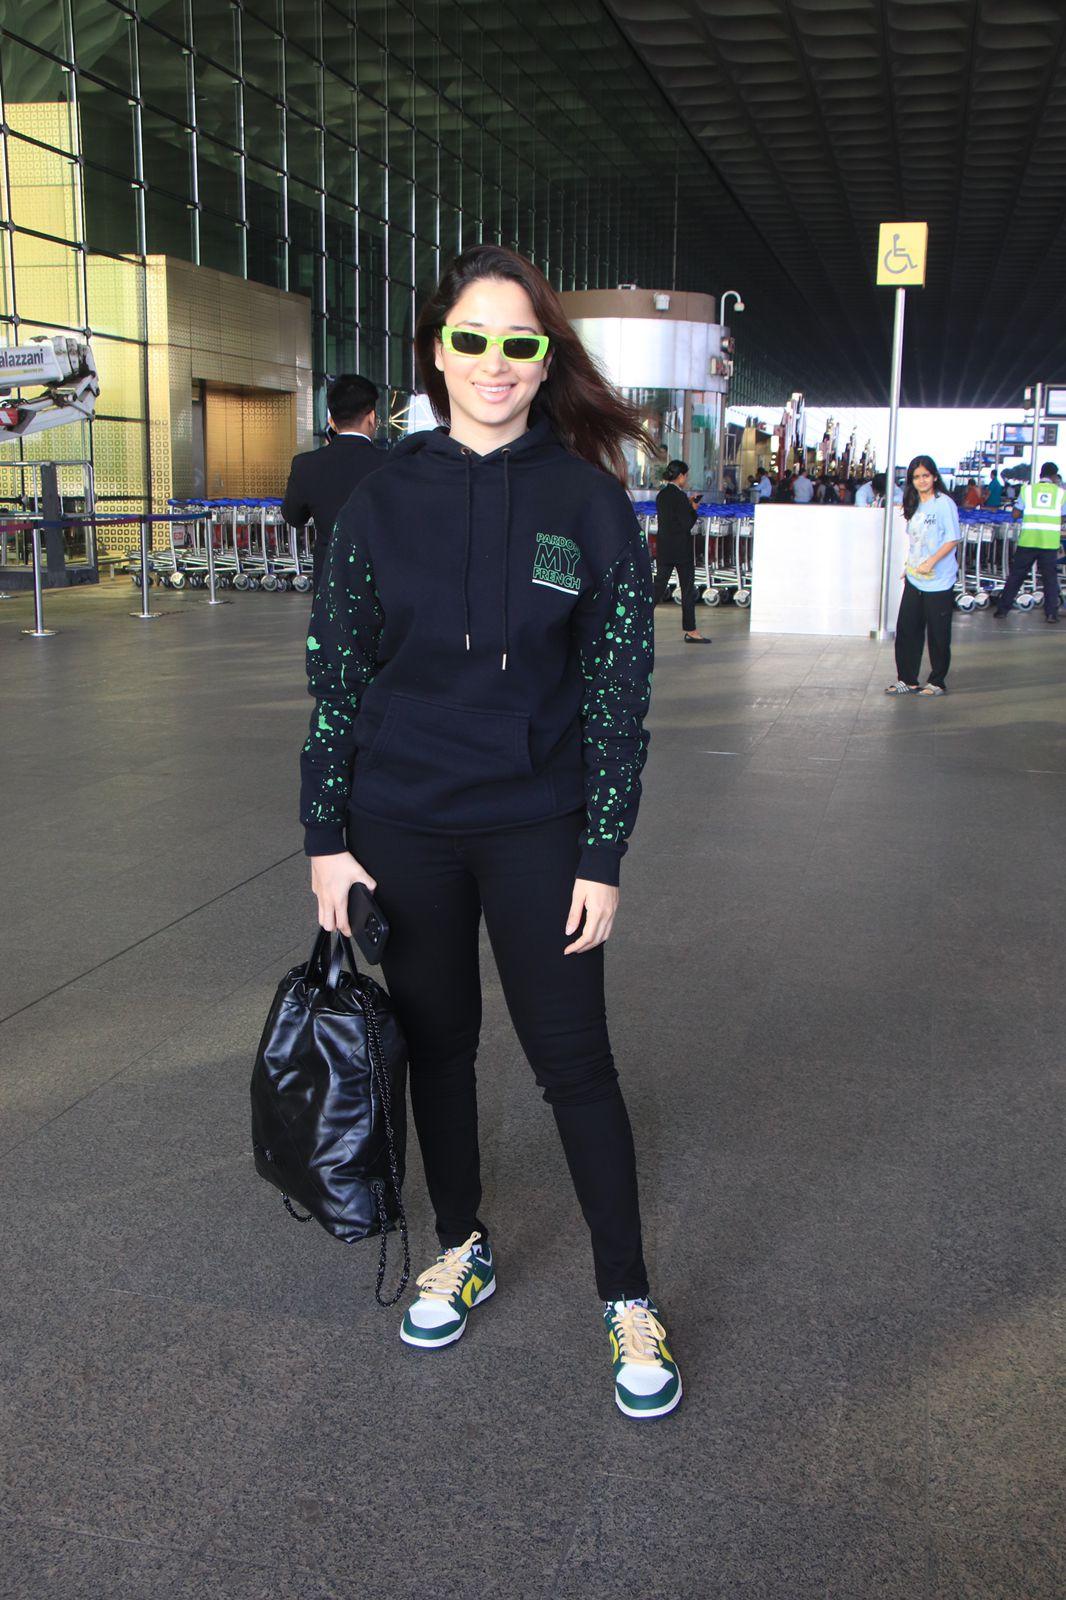 Tamannaah Bhatia looked dapper in her comfy airport look